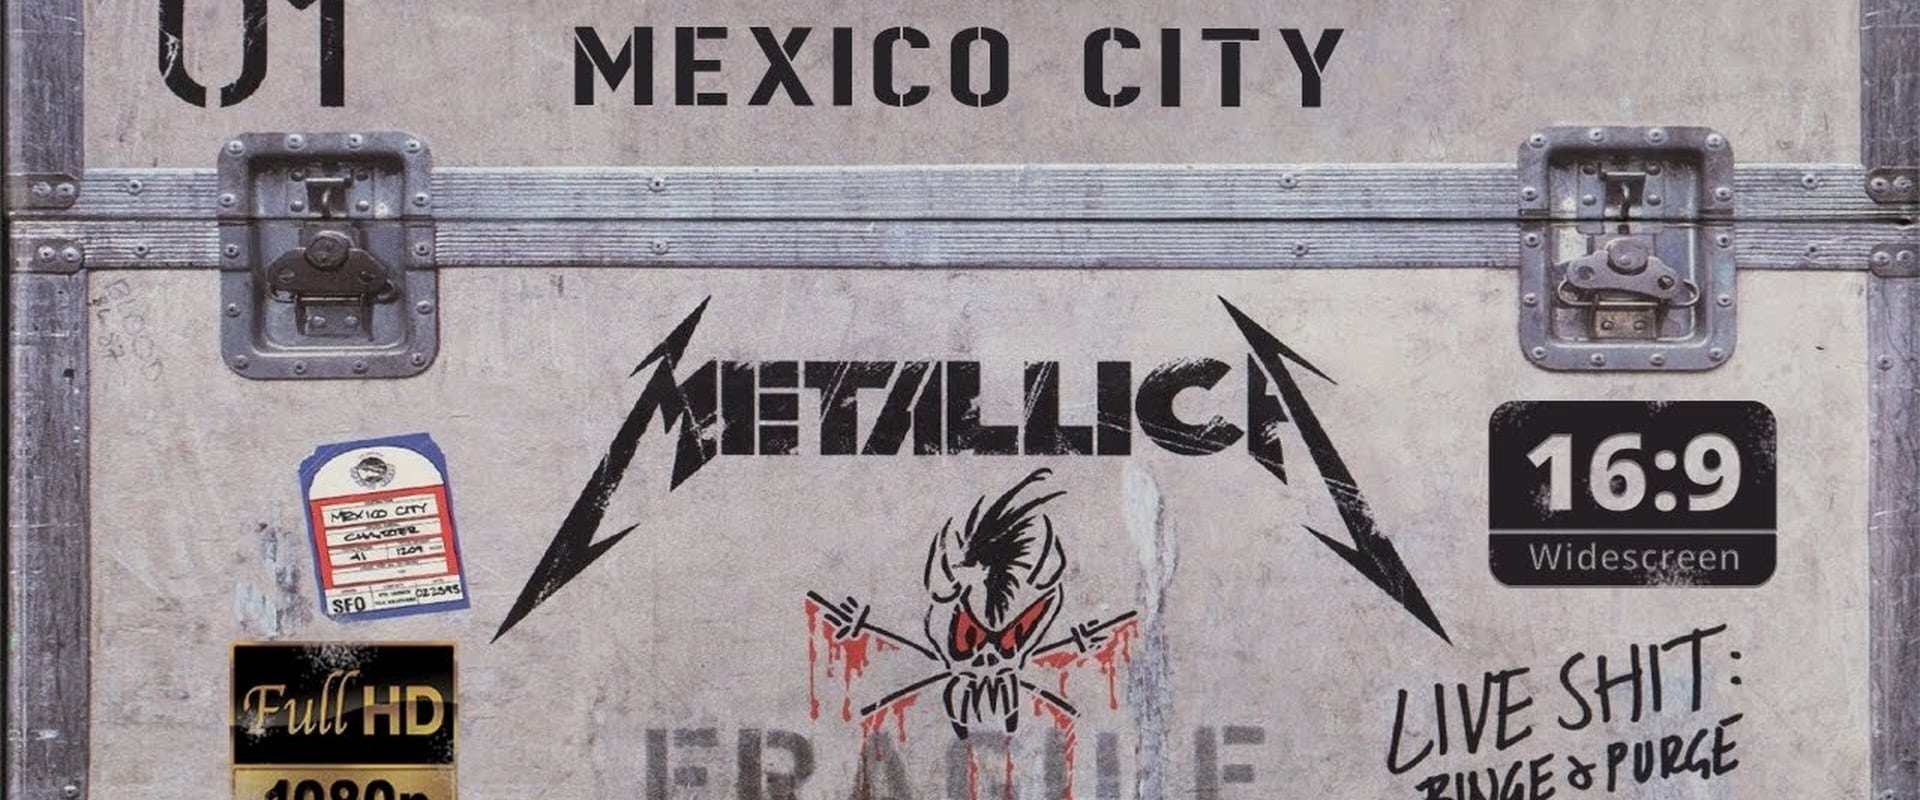 Metallica: Live Shit - Binge & Purge, Seattle 1989